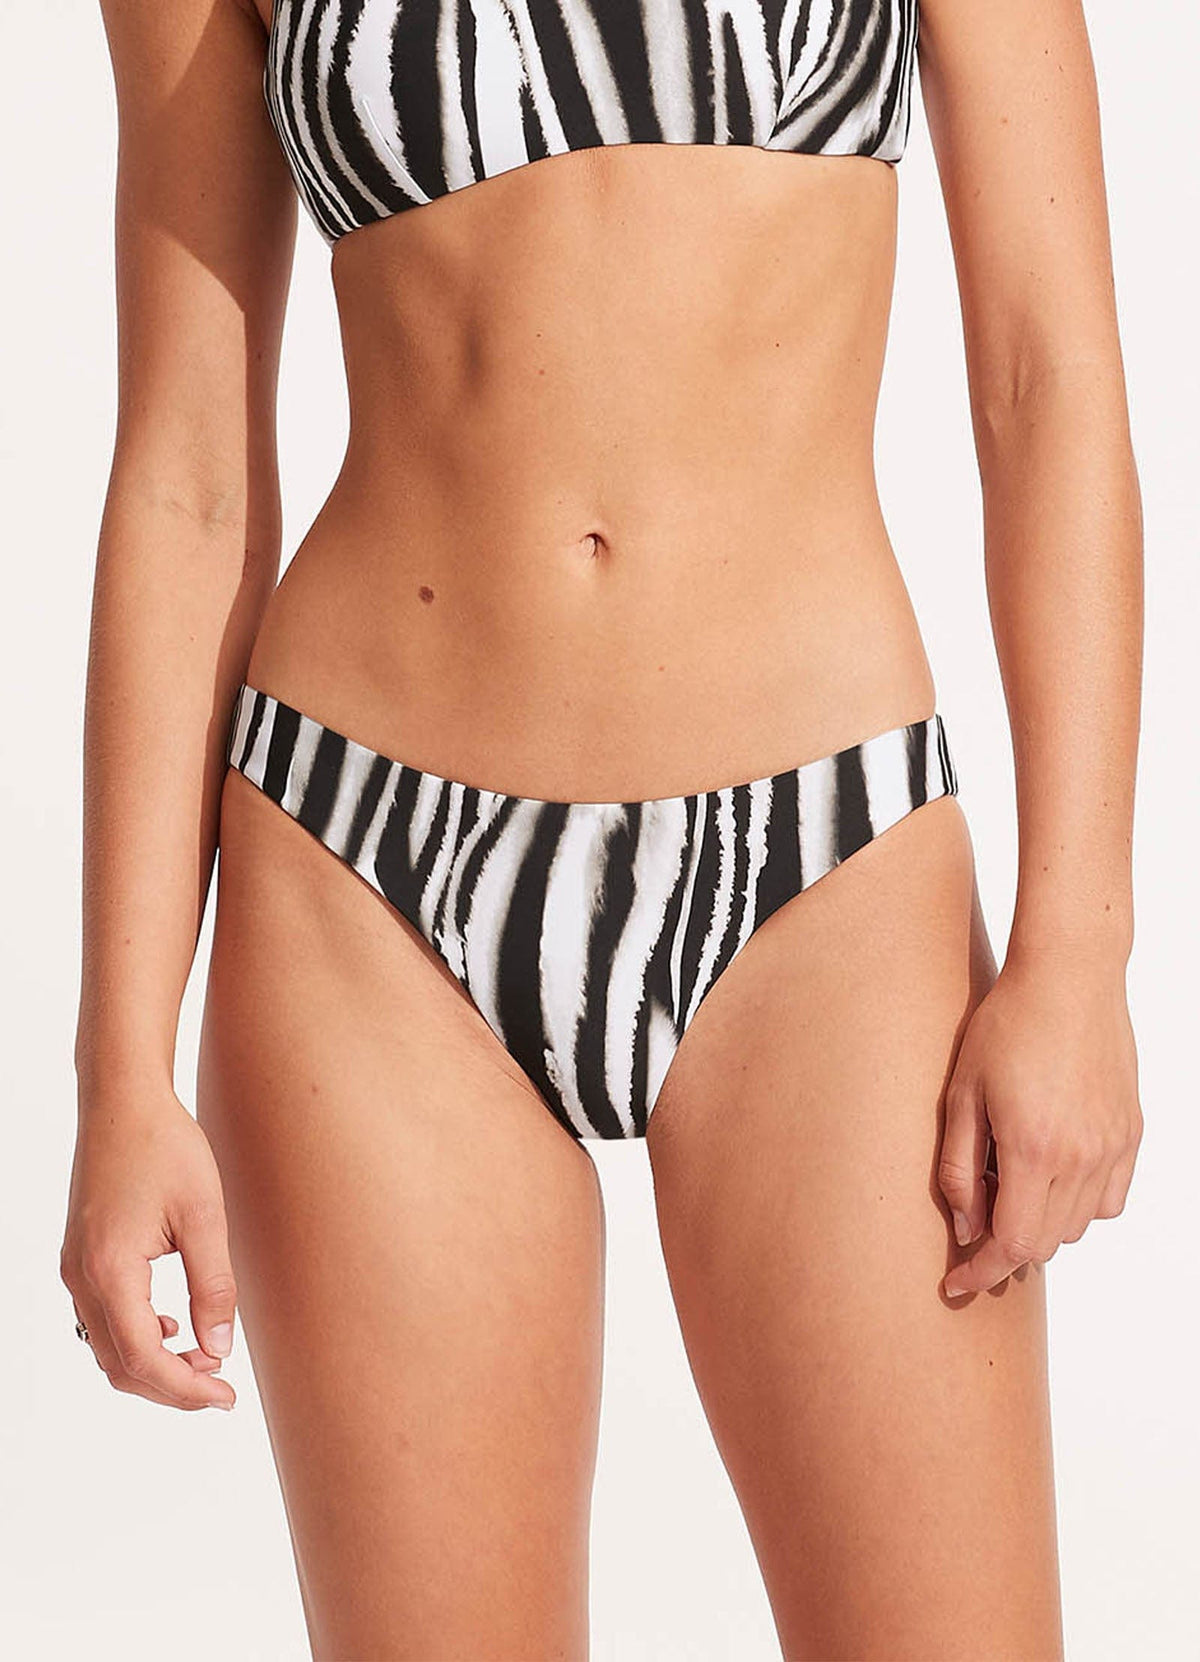 Zahara Hipster Pant - Seafolly - Splash Swimwear  - bikini bottoms, SALE, Seafolly, Womens, womens swim - Splash Swimwear 